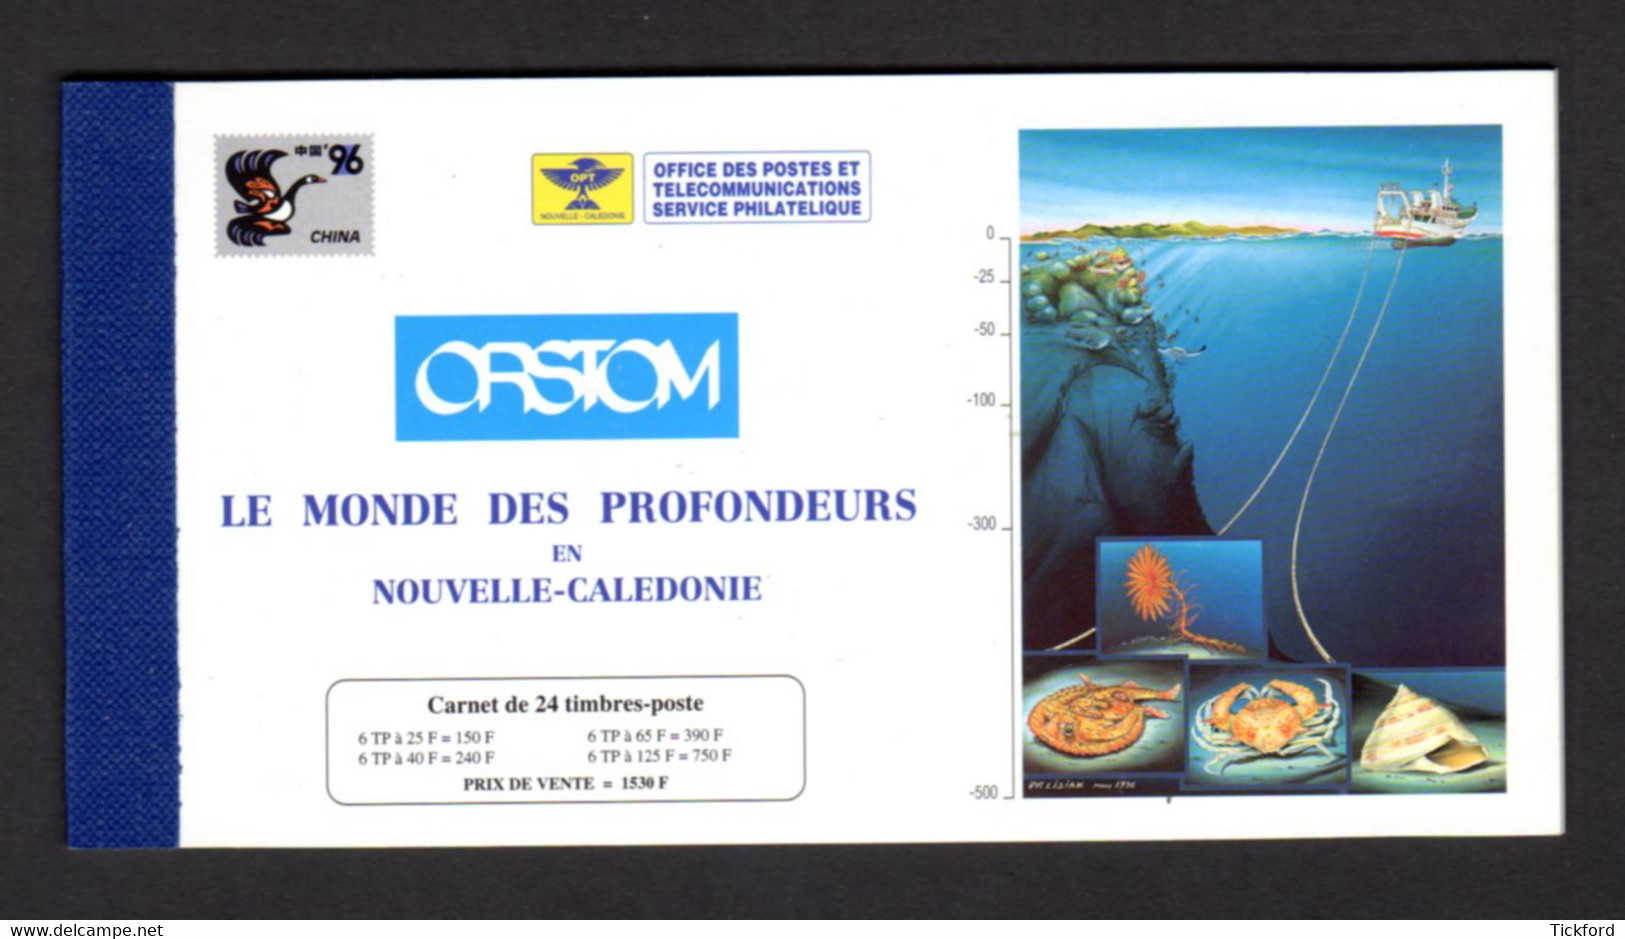 NOUVELLE CALEDONIE 1996 - Yvert N° C710 - Neuf ** / MNH - Orstom, Le Monde Des Profondeurs - Markenheftchen